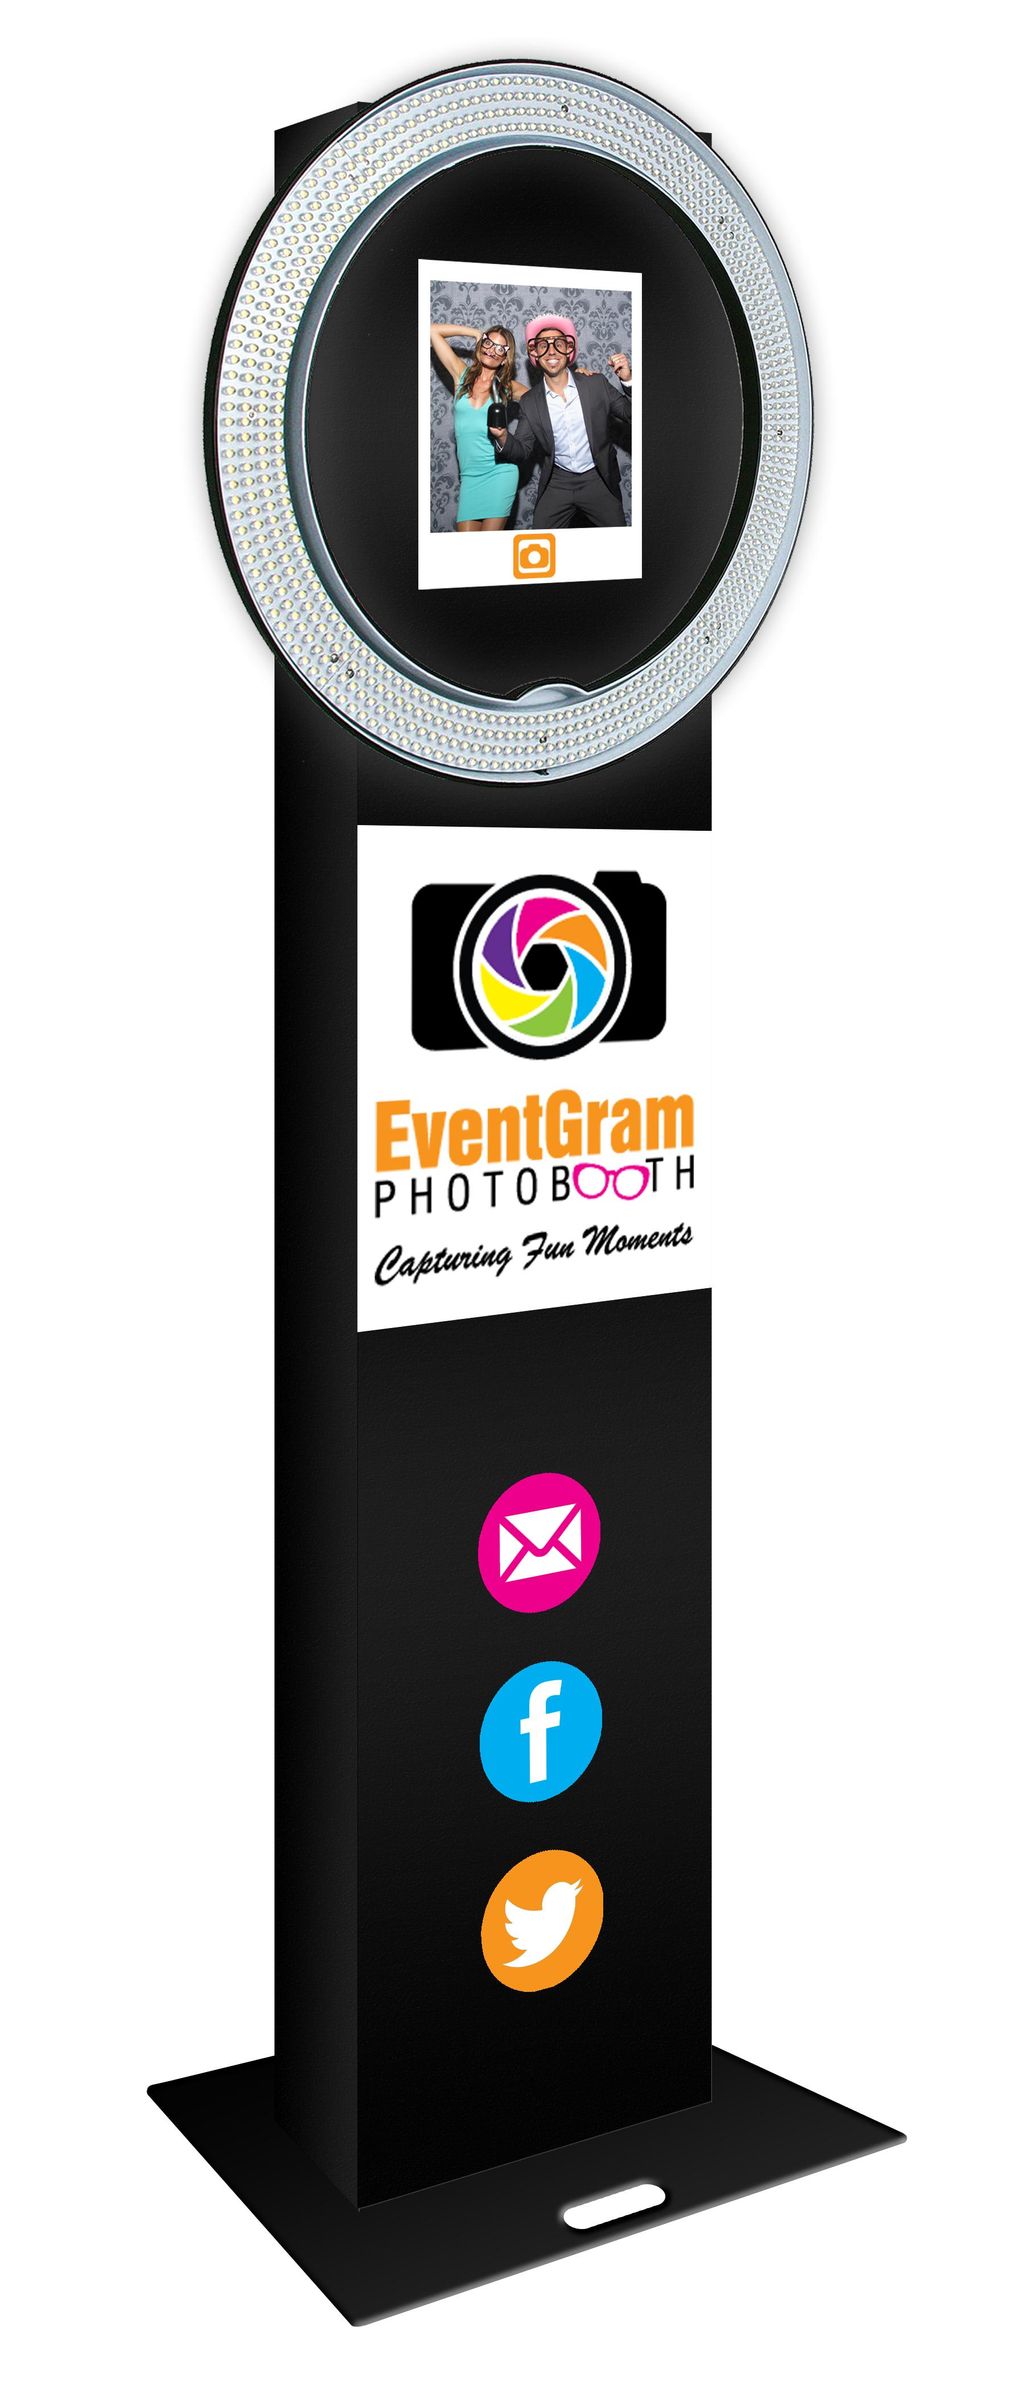 EventGram Photo booth